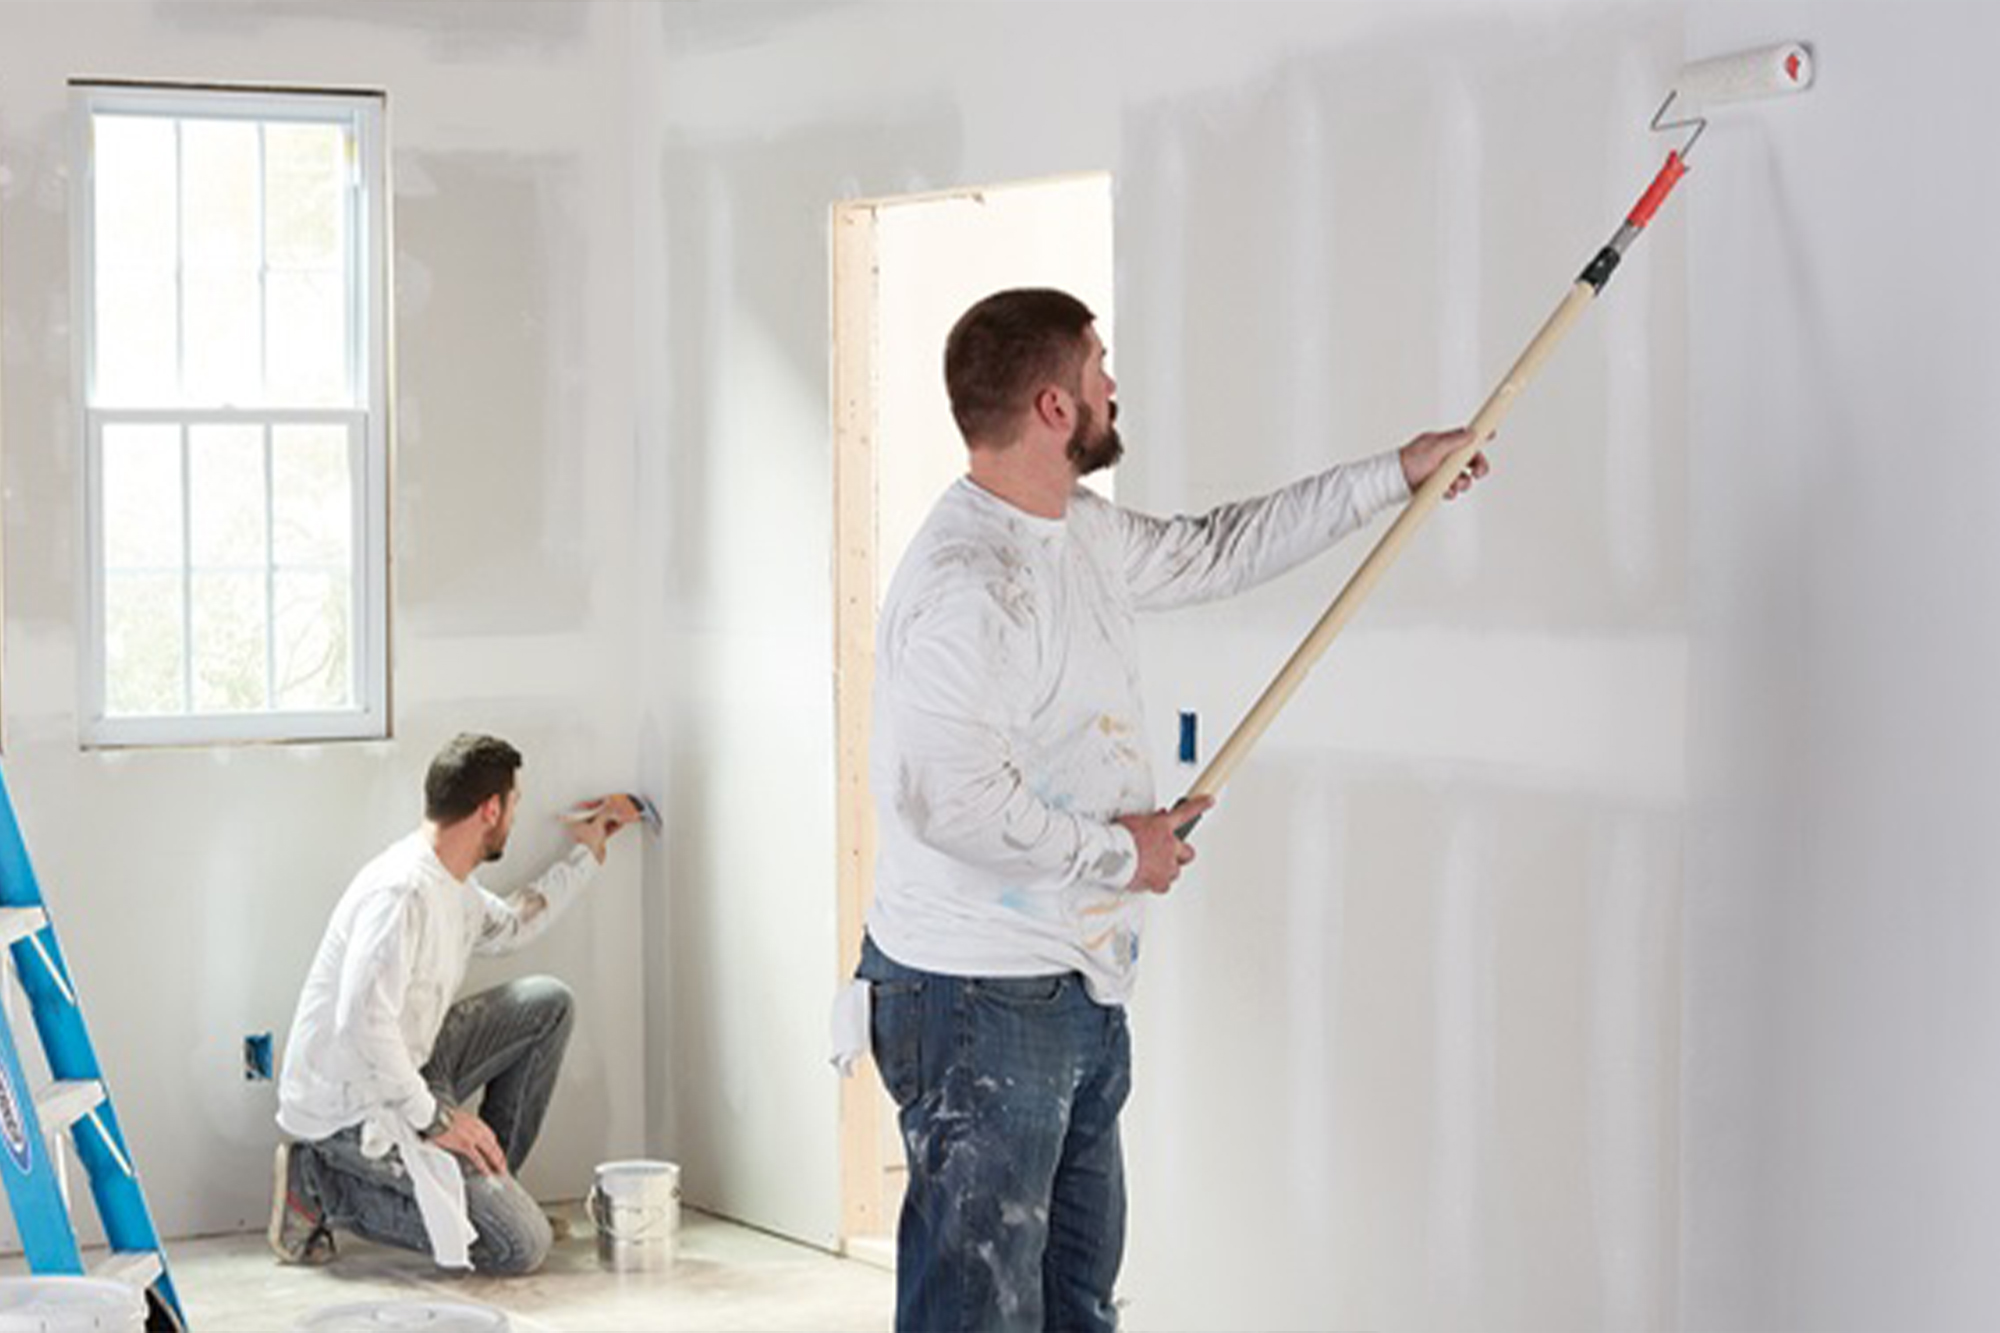 Men painting empty home interior